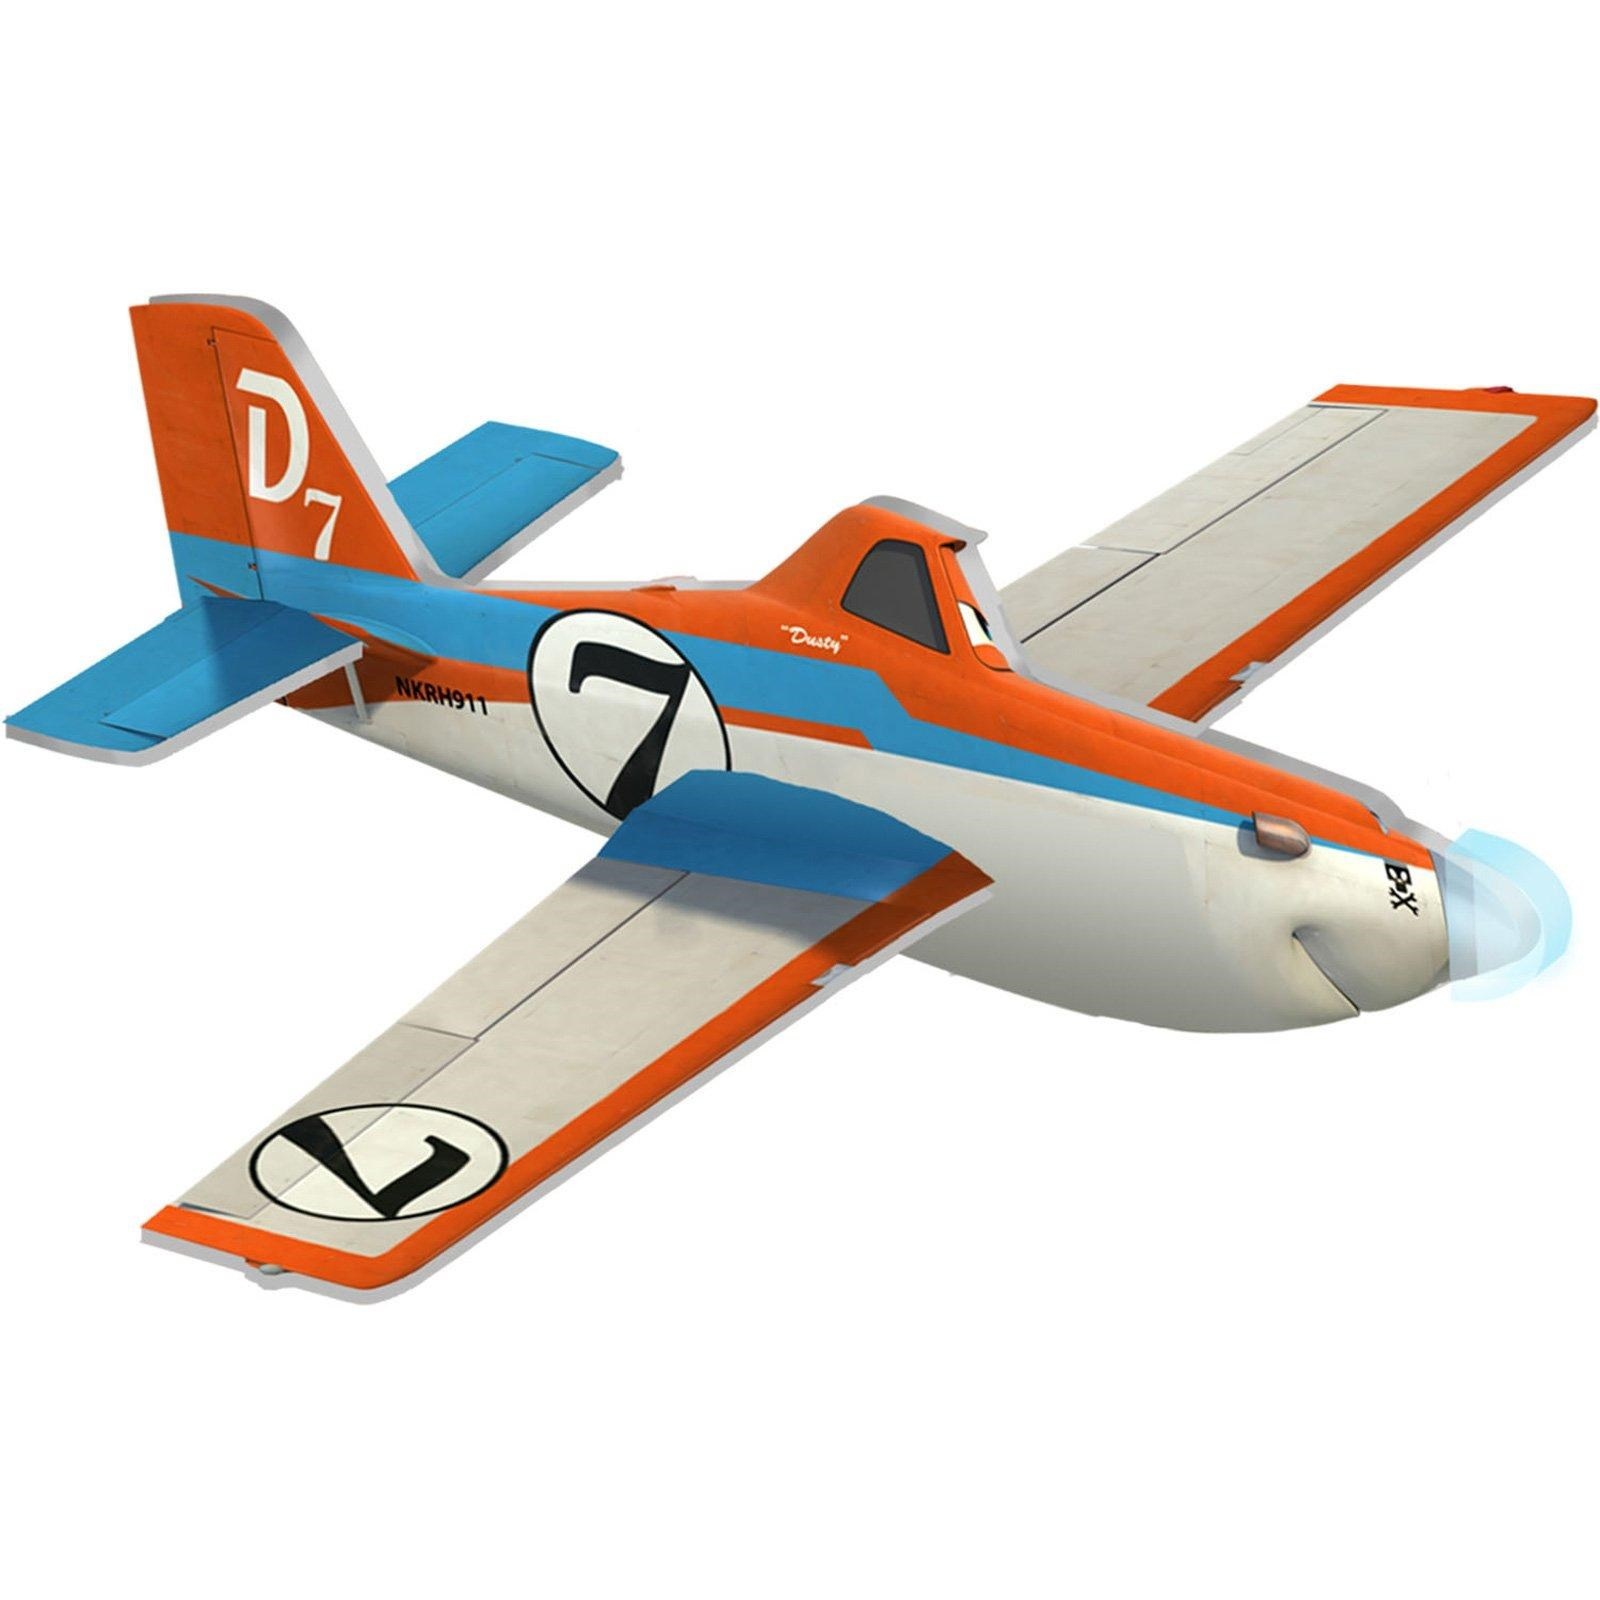 Cutest Disney Planes Party Supplies for Kids | MyKidsGuide.com